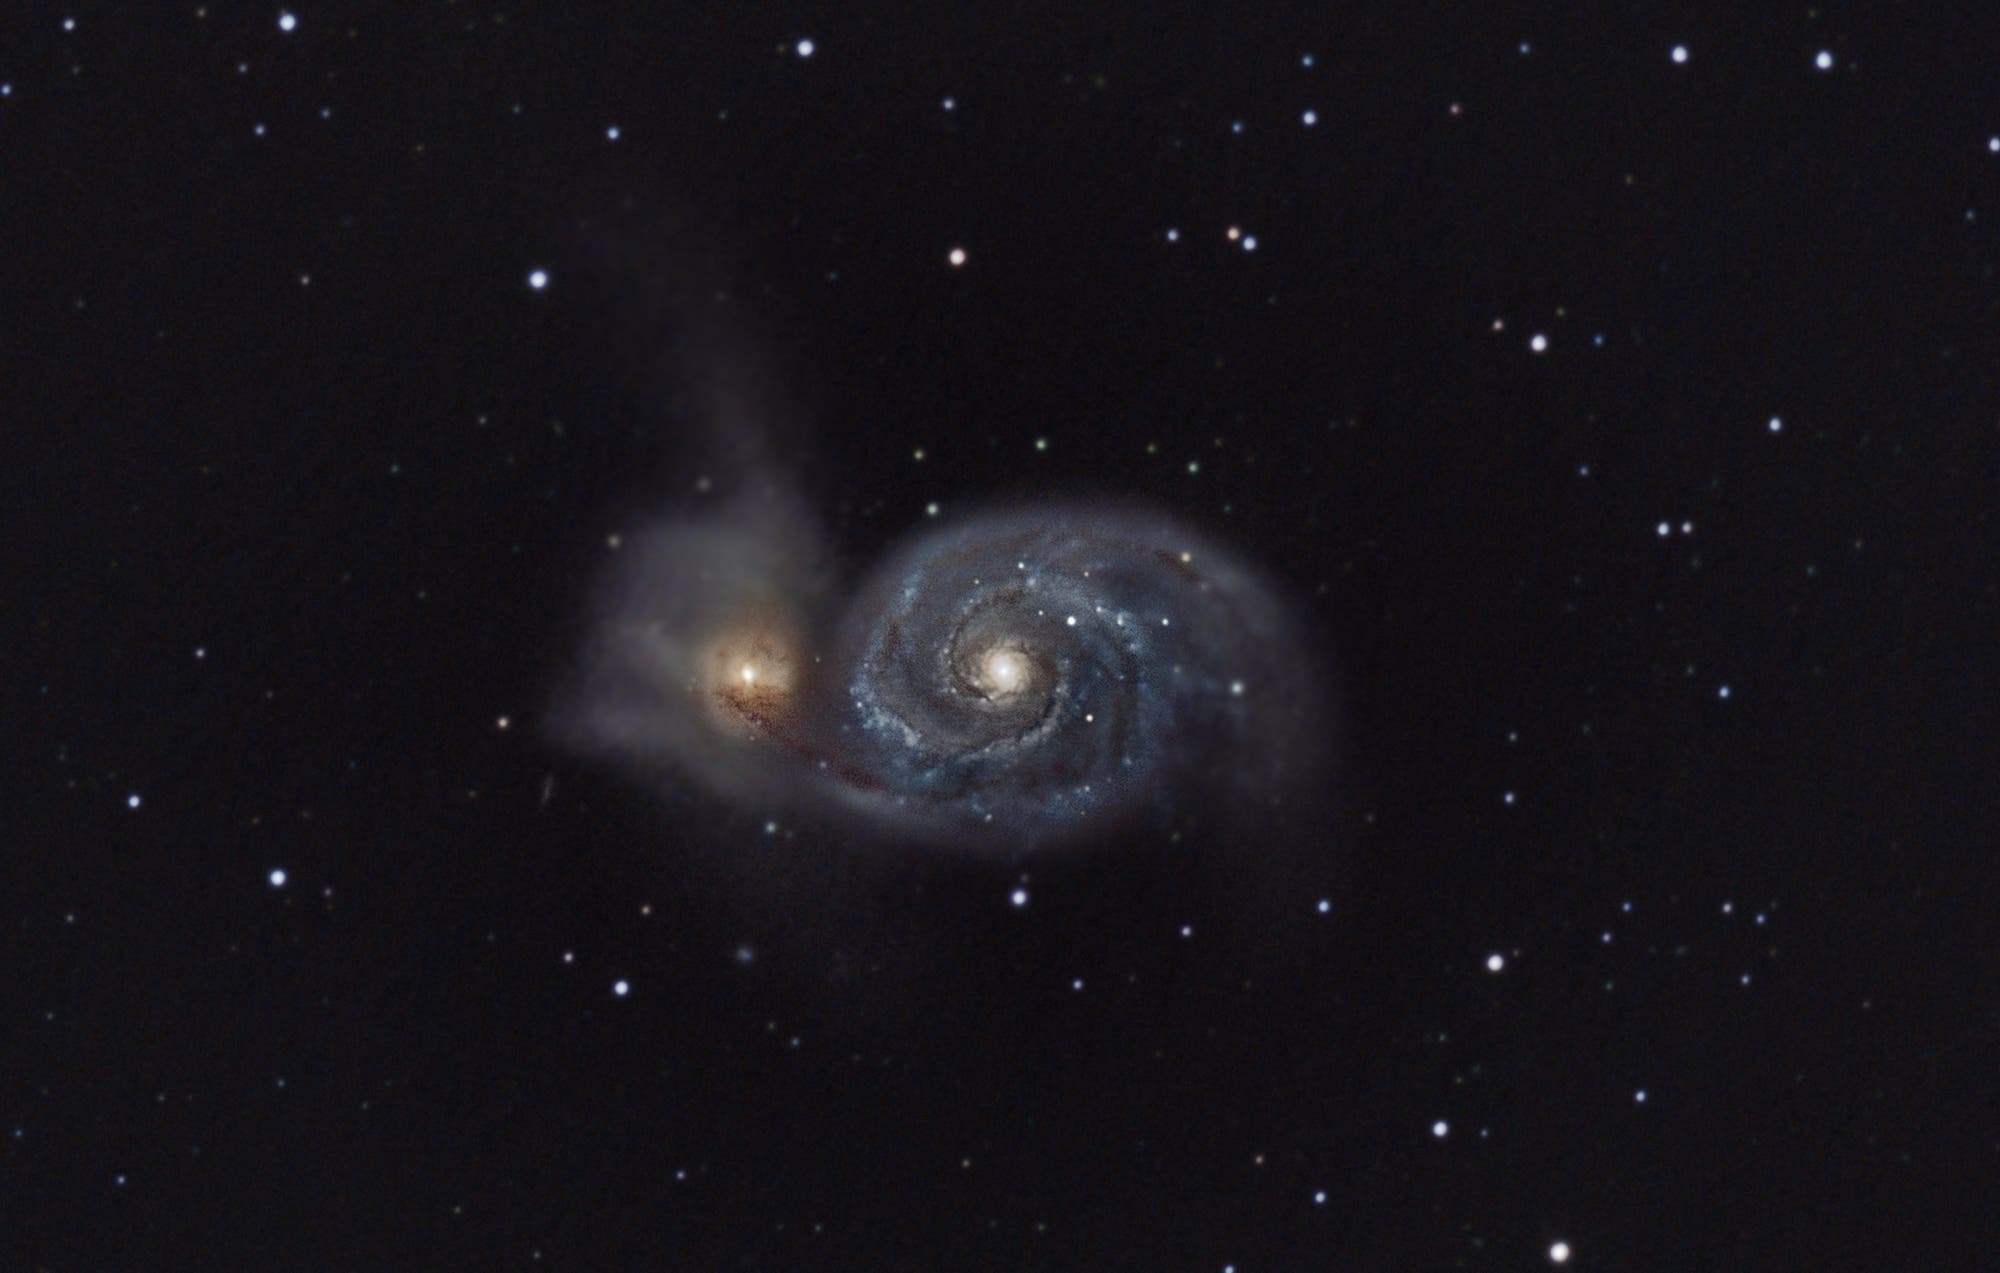 Whirlpoolgalaxie - Messier 51